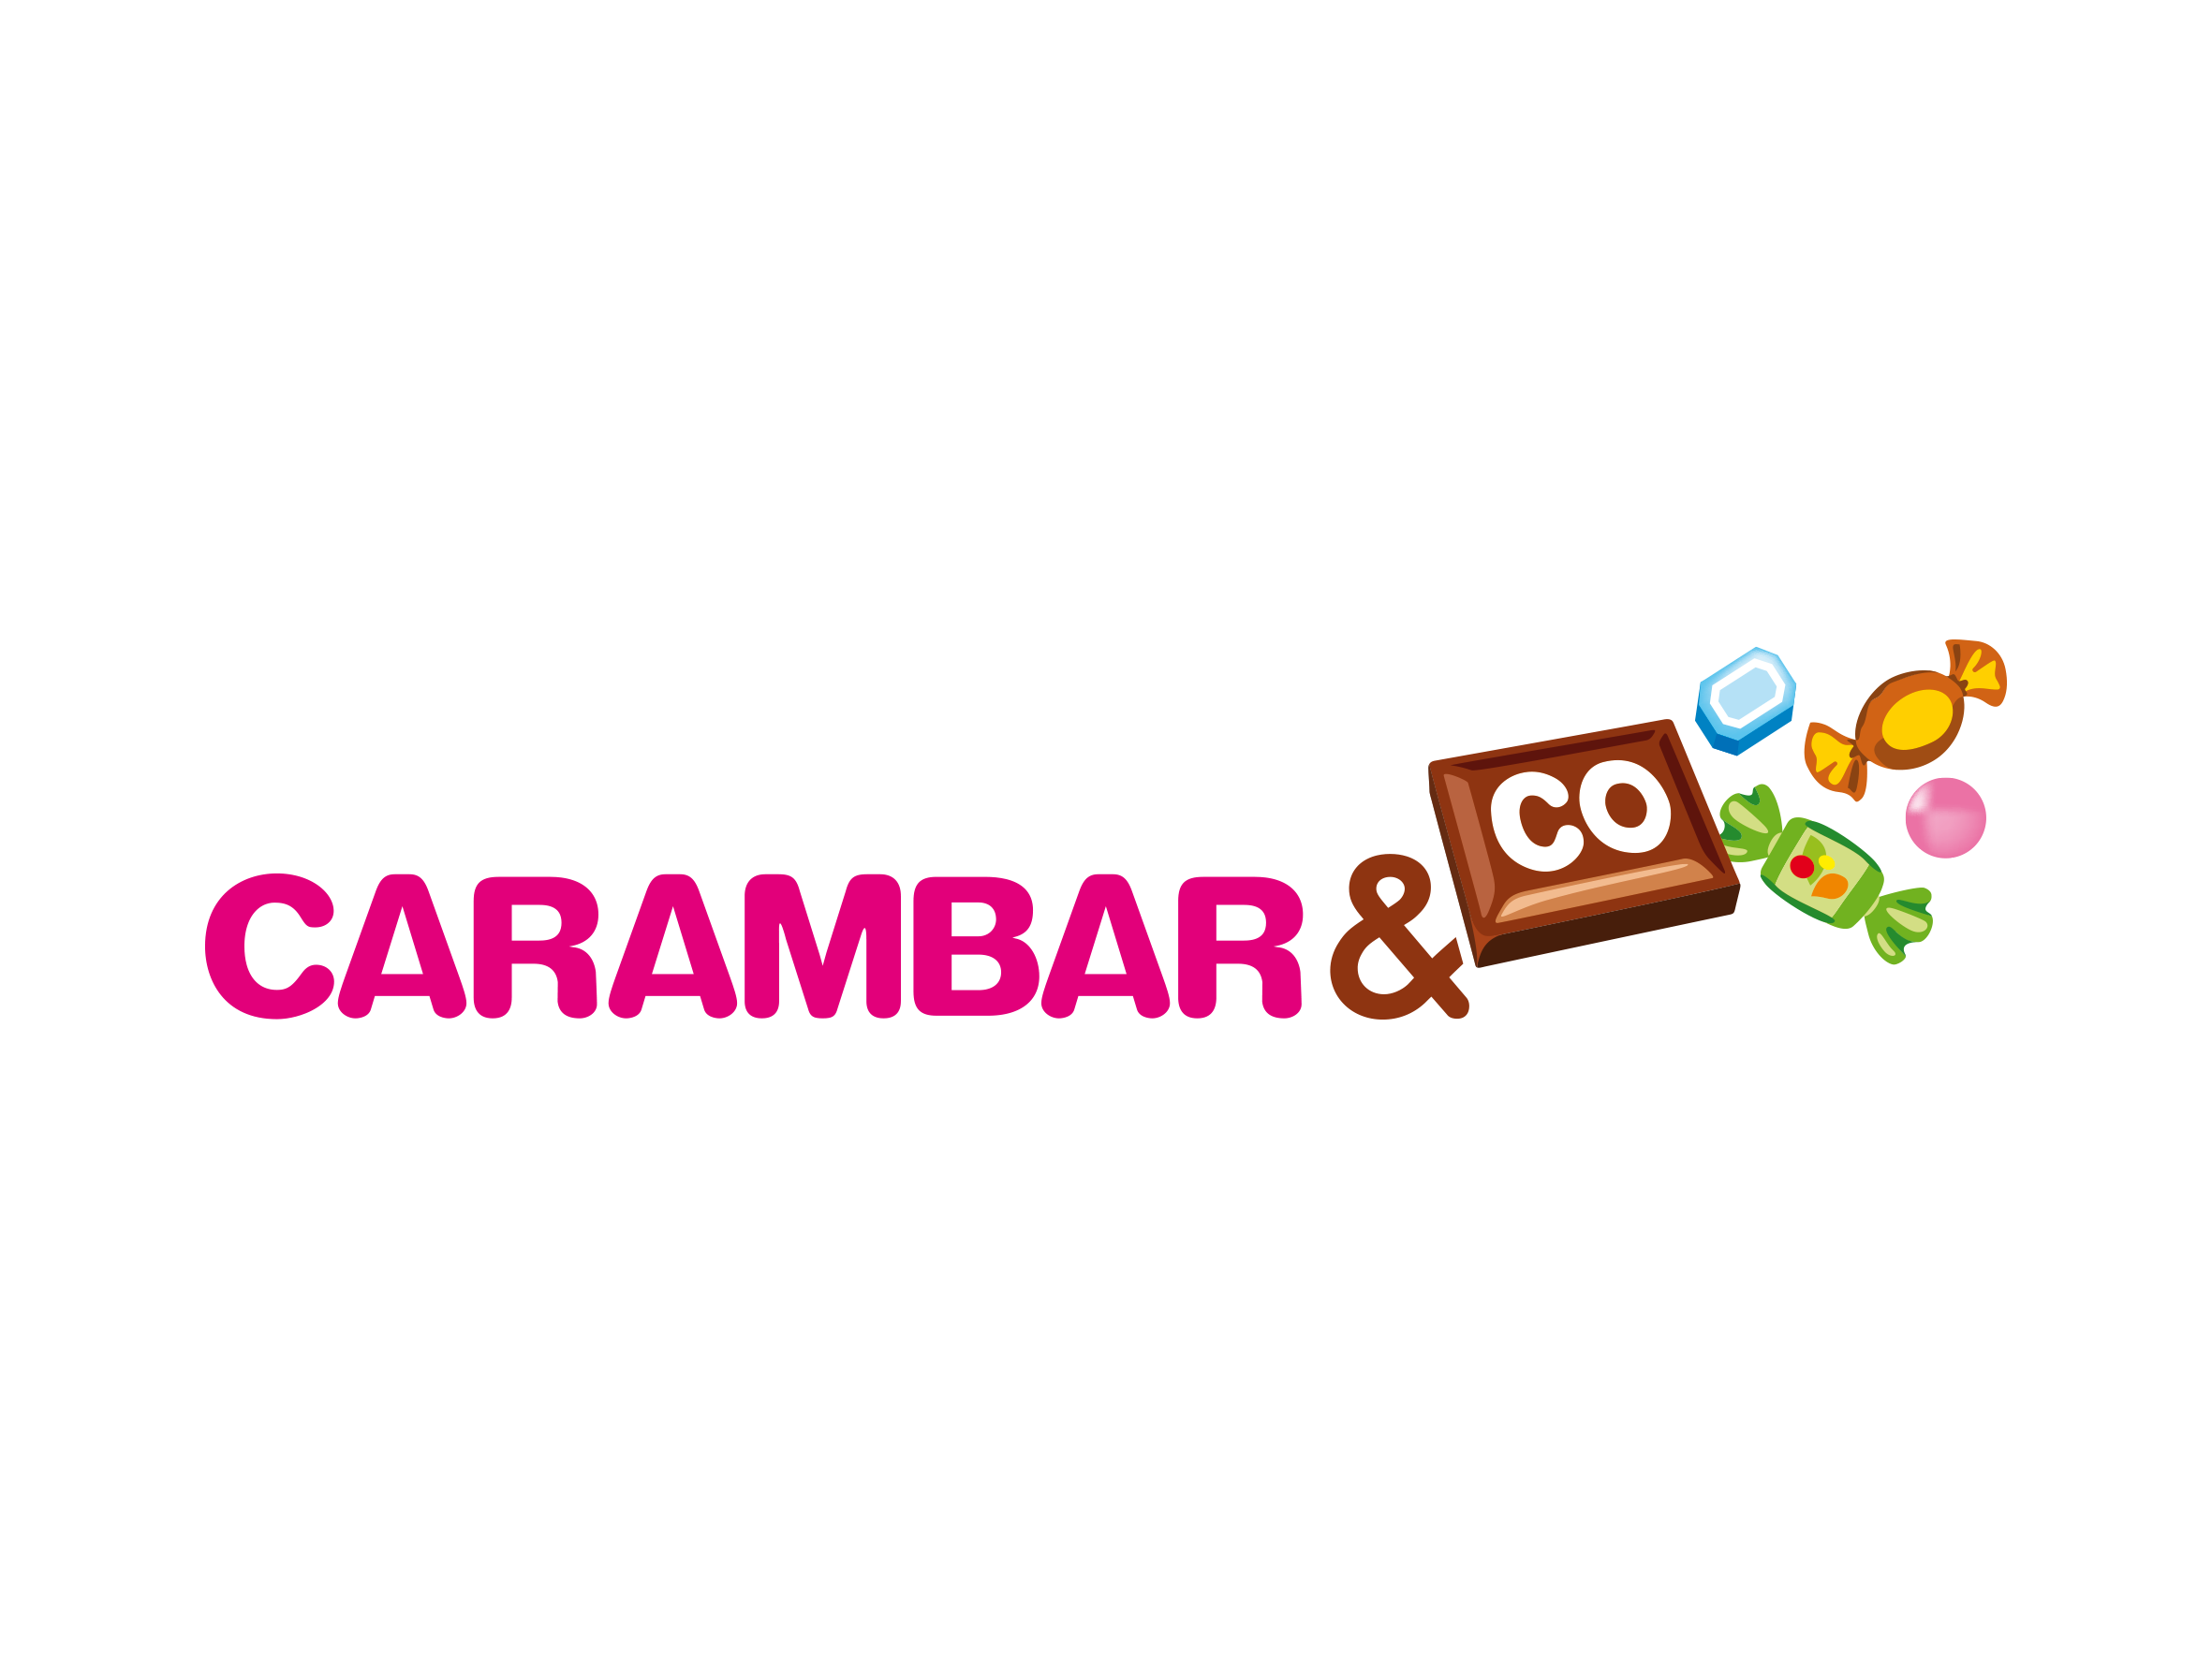 Carambar and Co